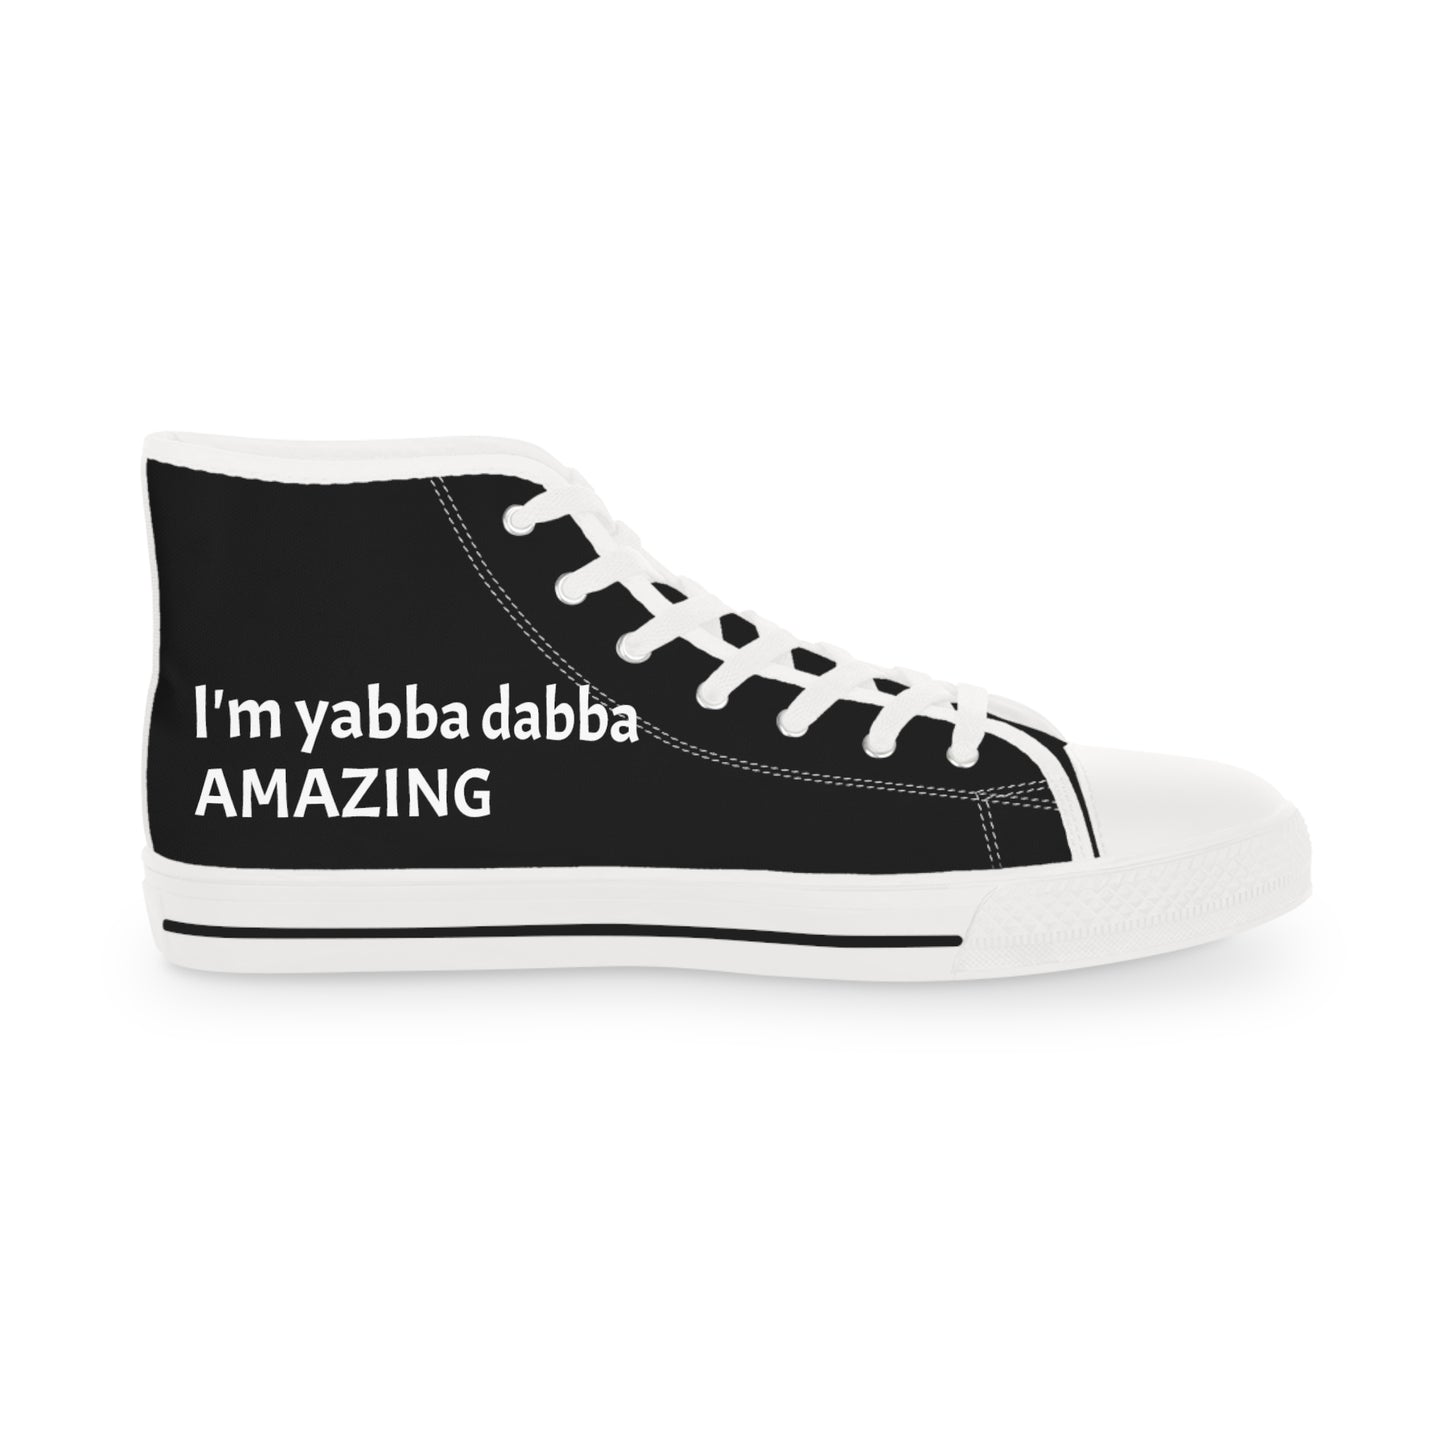 T4x Yabba Dabba Amazing Men's High Top Sneakers